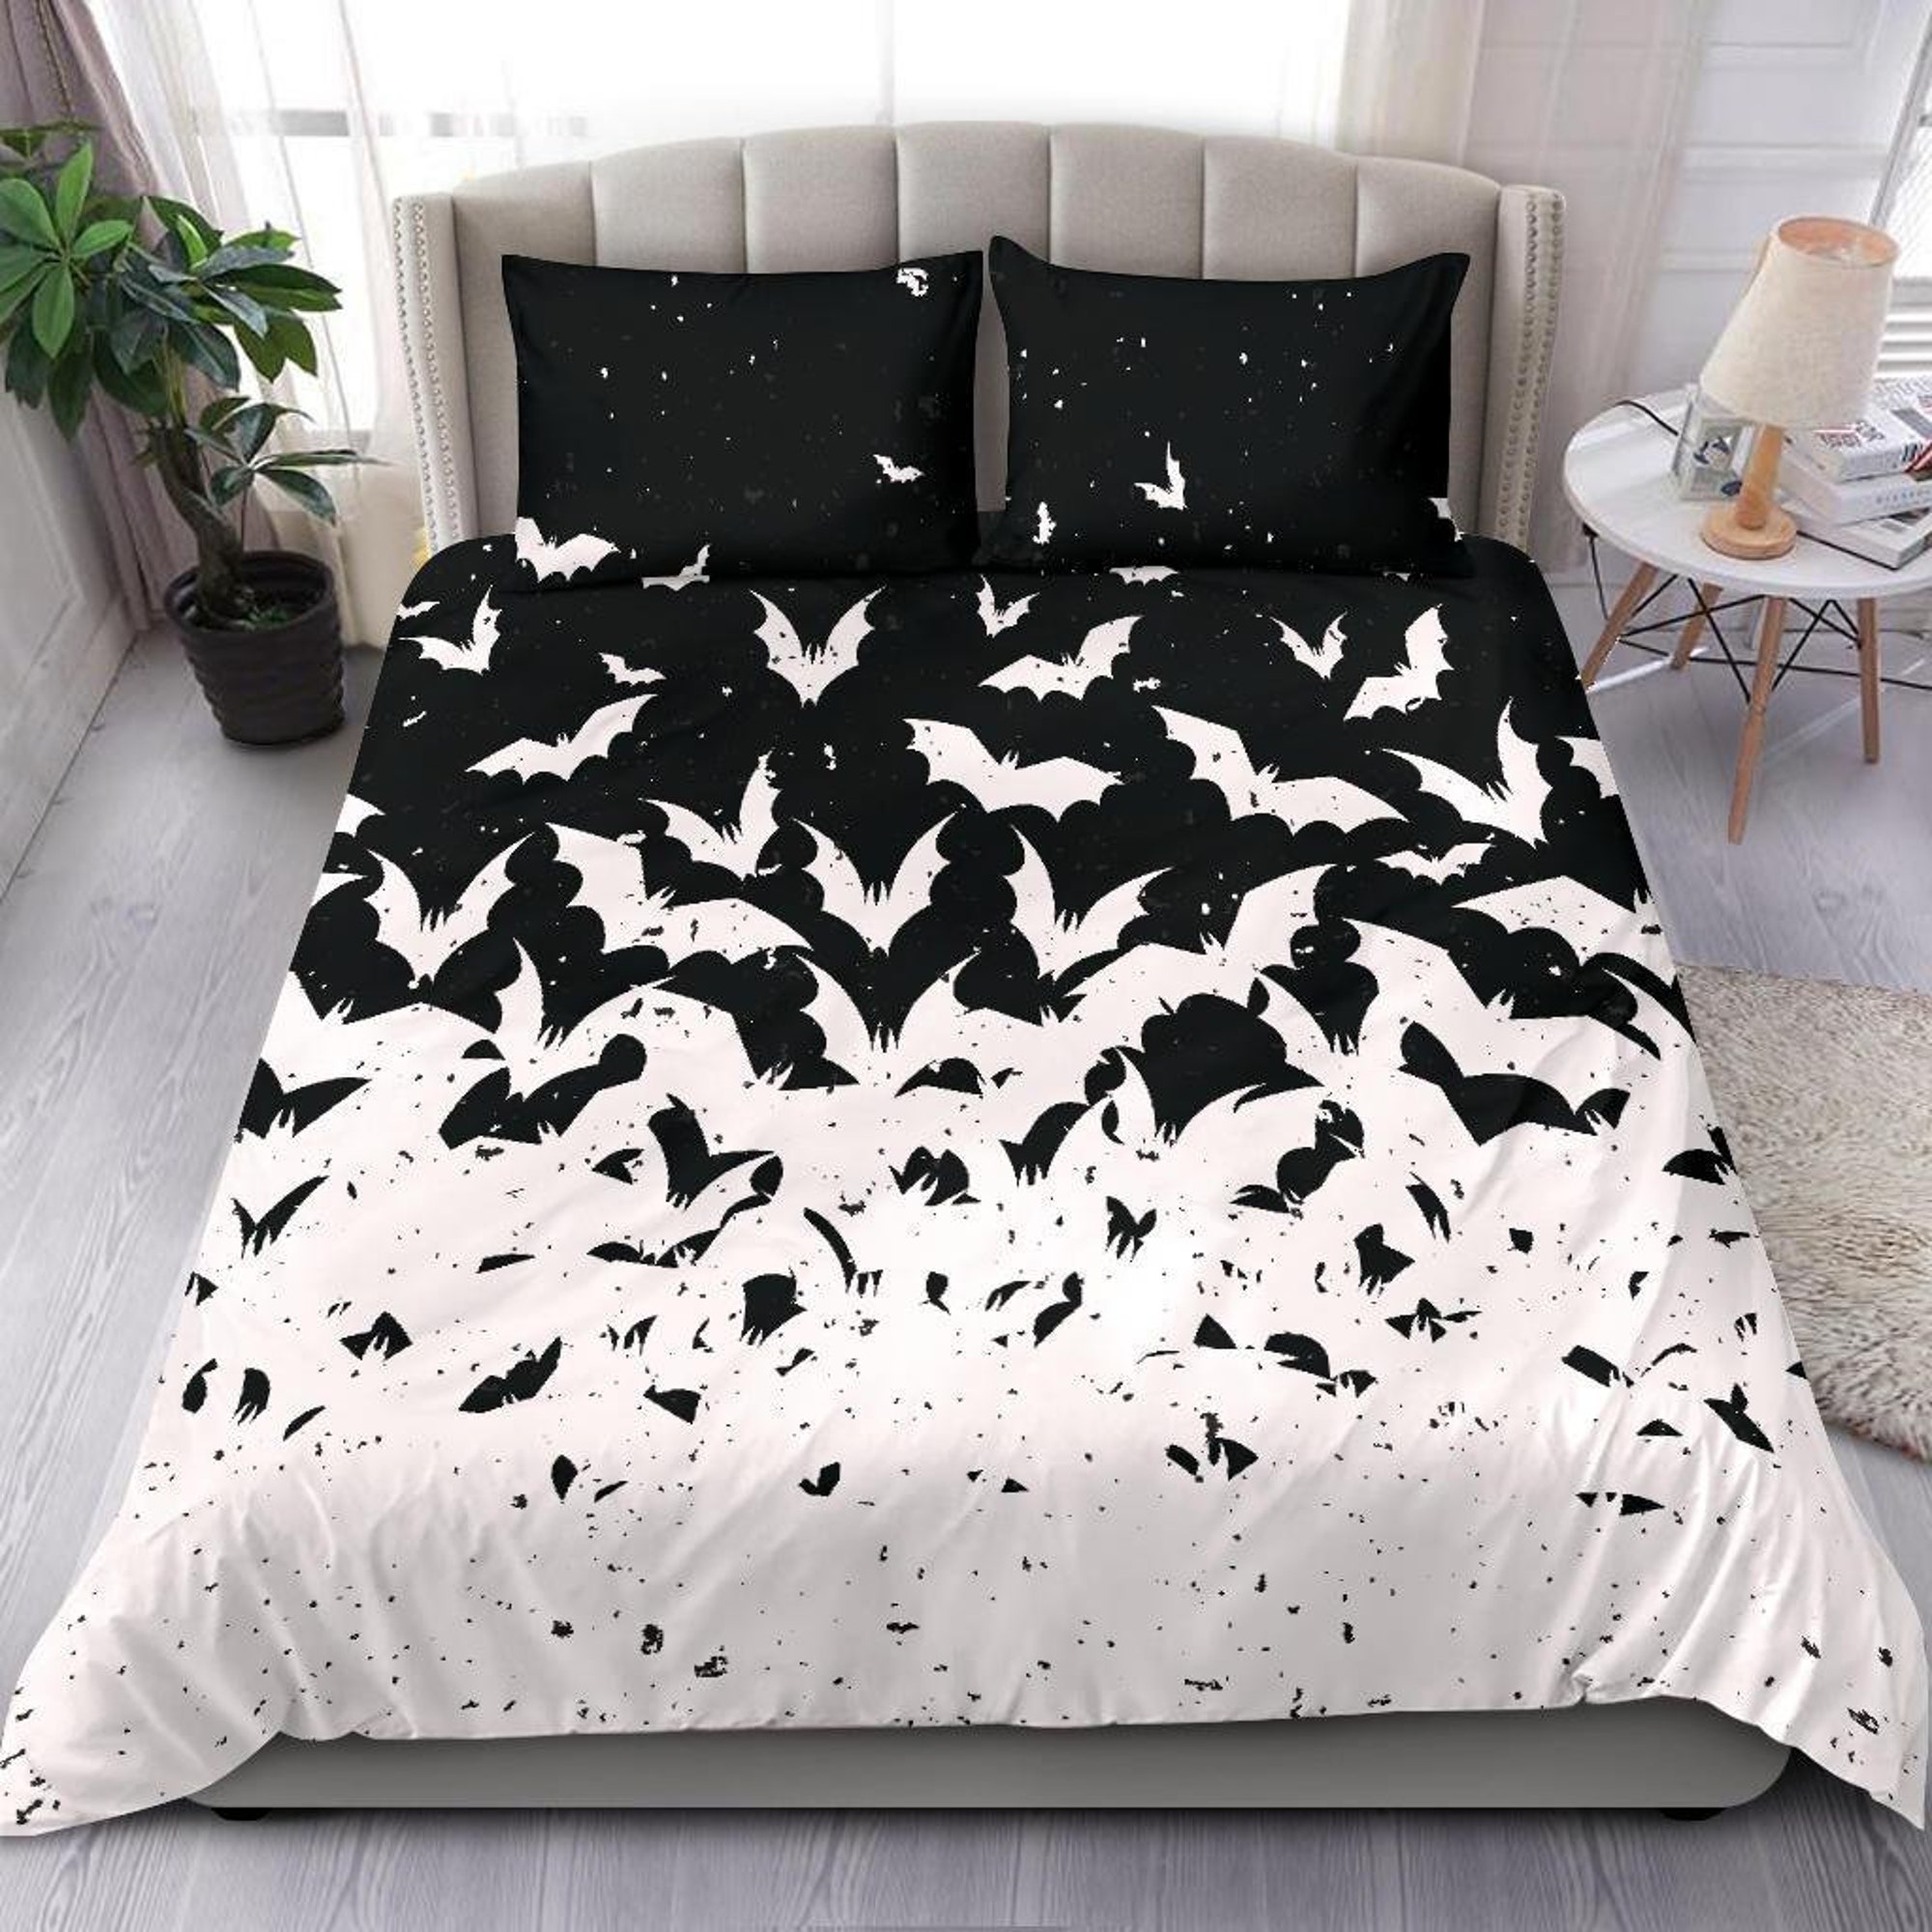 Gothic Bedding Gothic Duvet Cover - Bats Gothic Bedding Set Dcor Bedding Sets